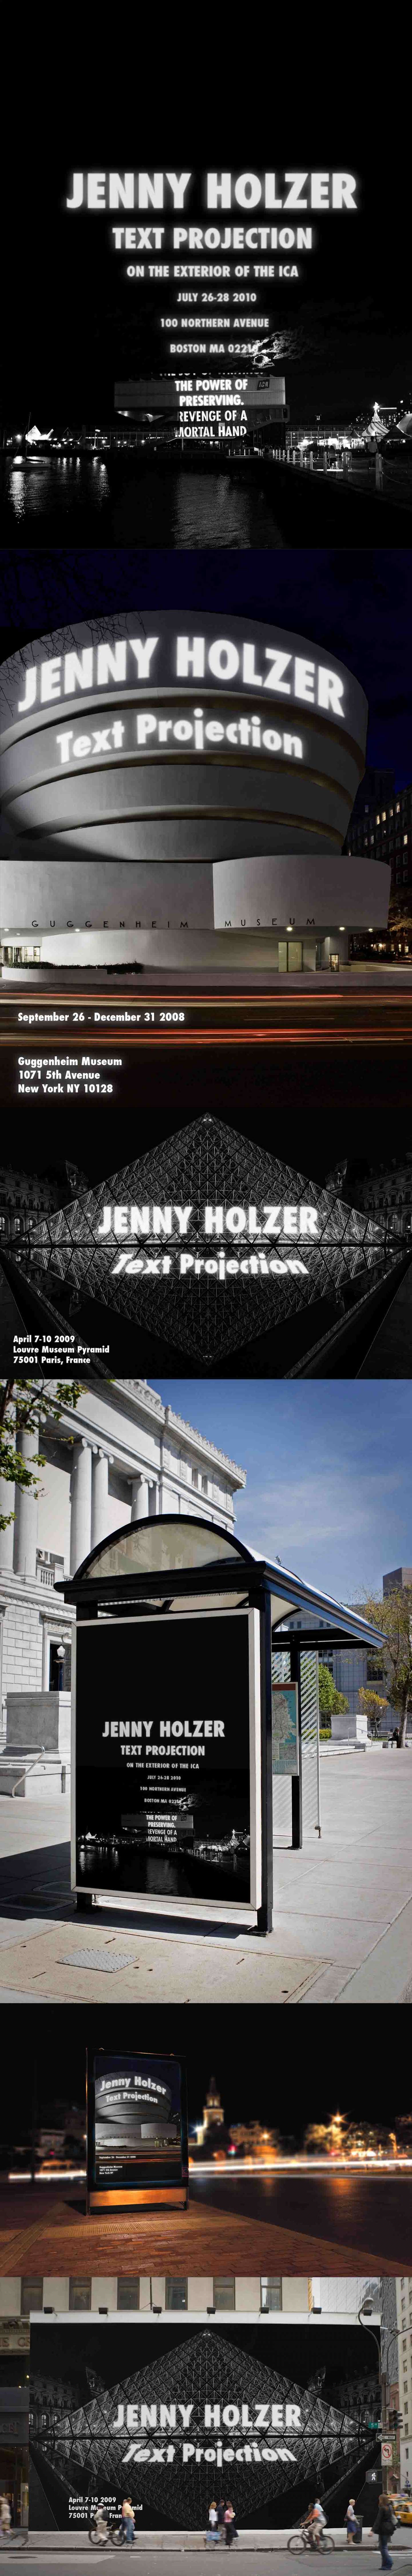 Jenny Holzer #1 (Poster Design)